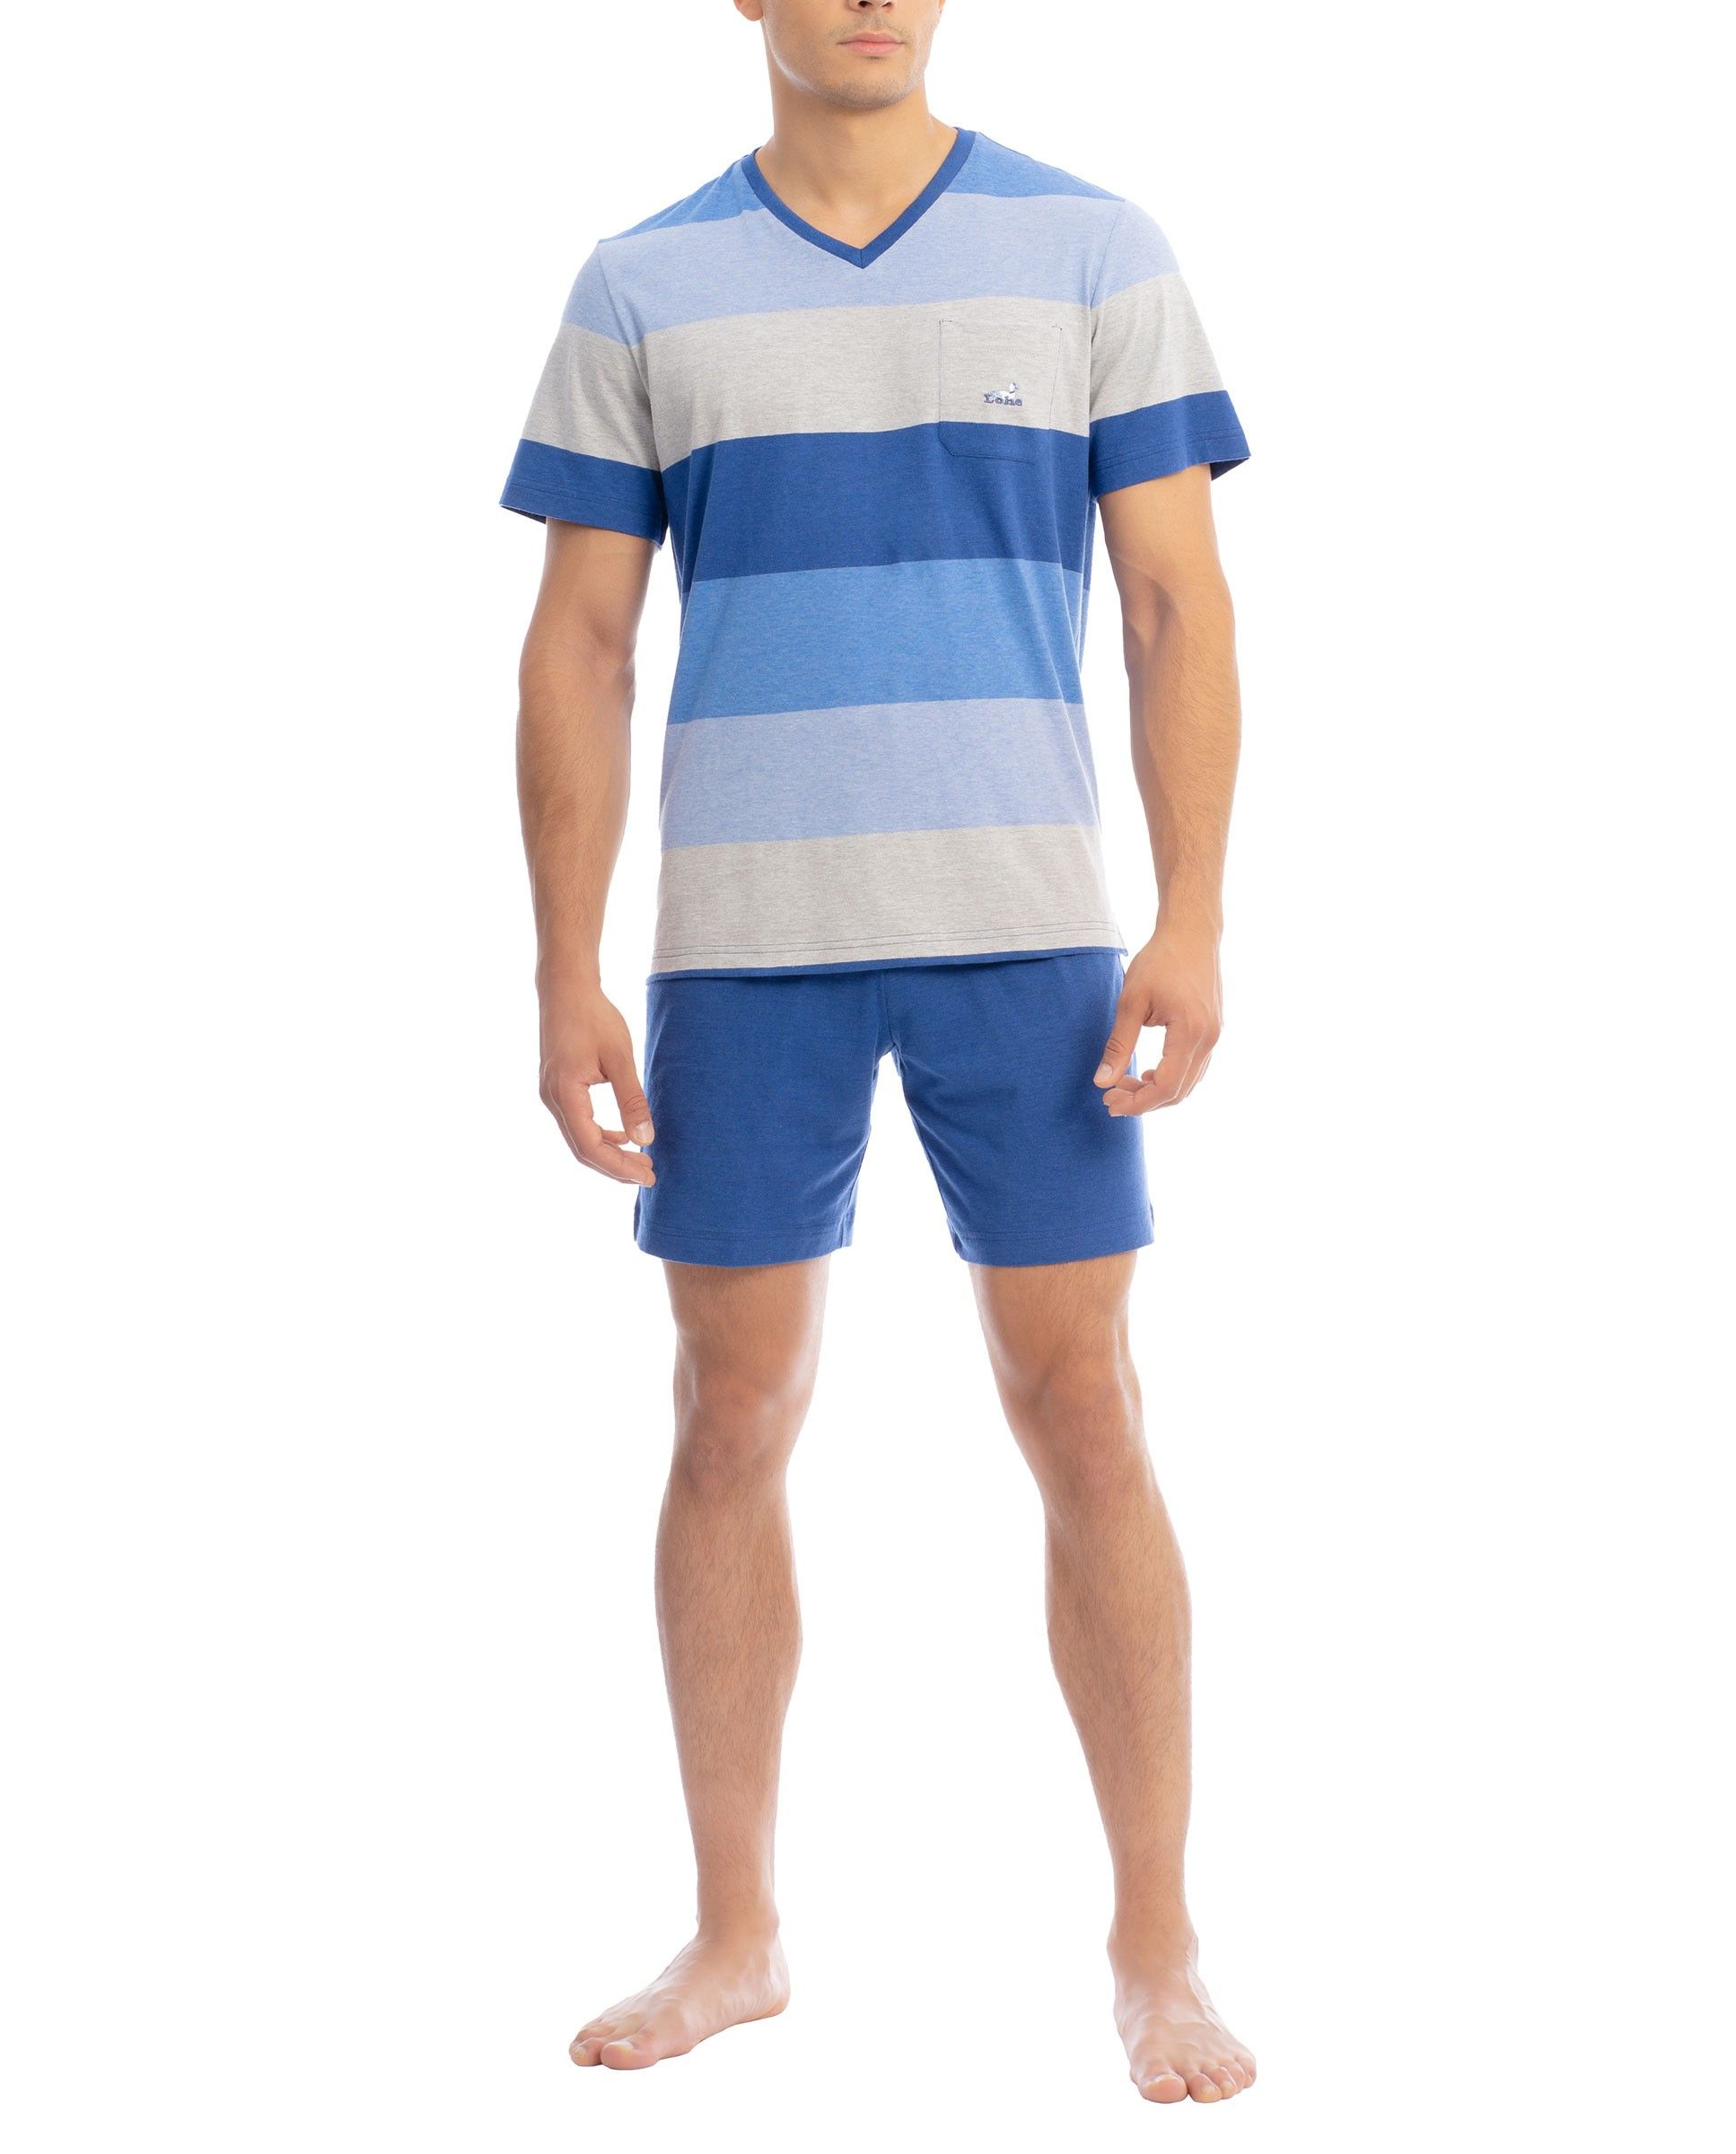 Men's summer pyjama shorts with stripes cotton vigoré